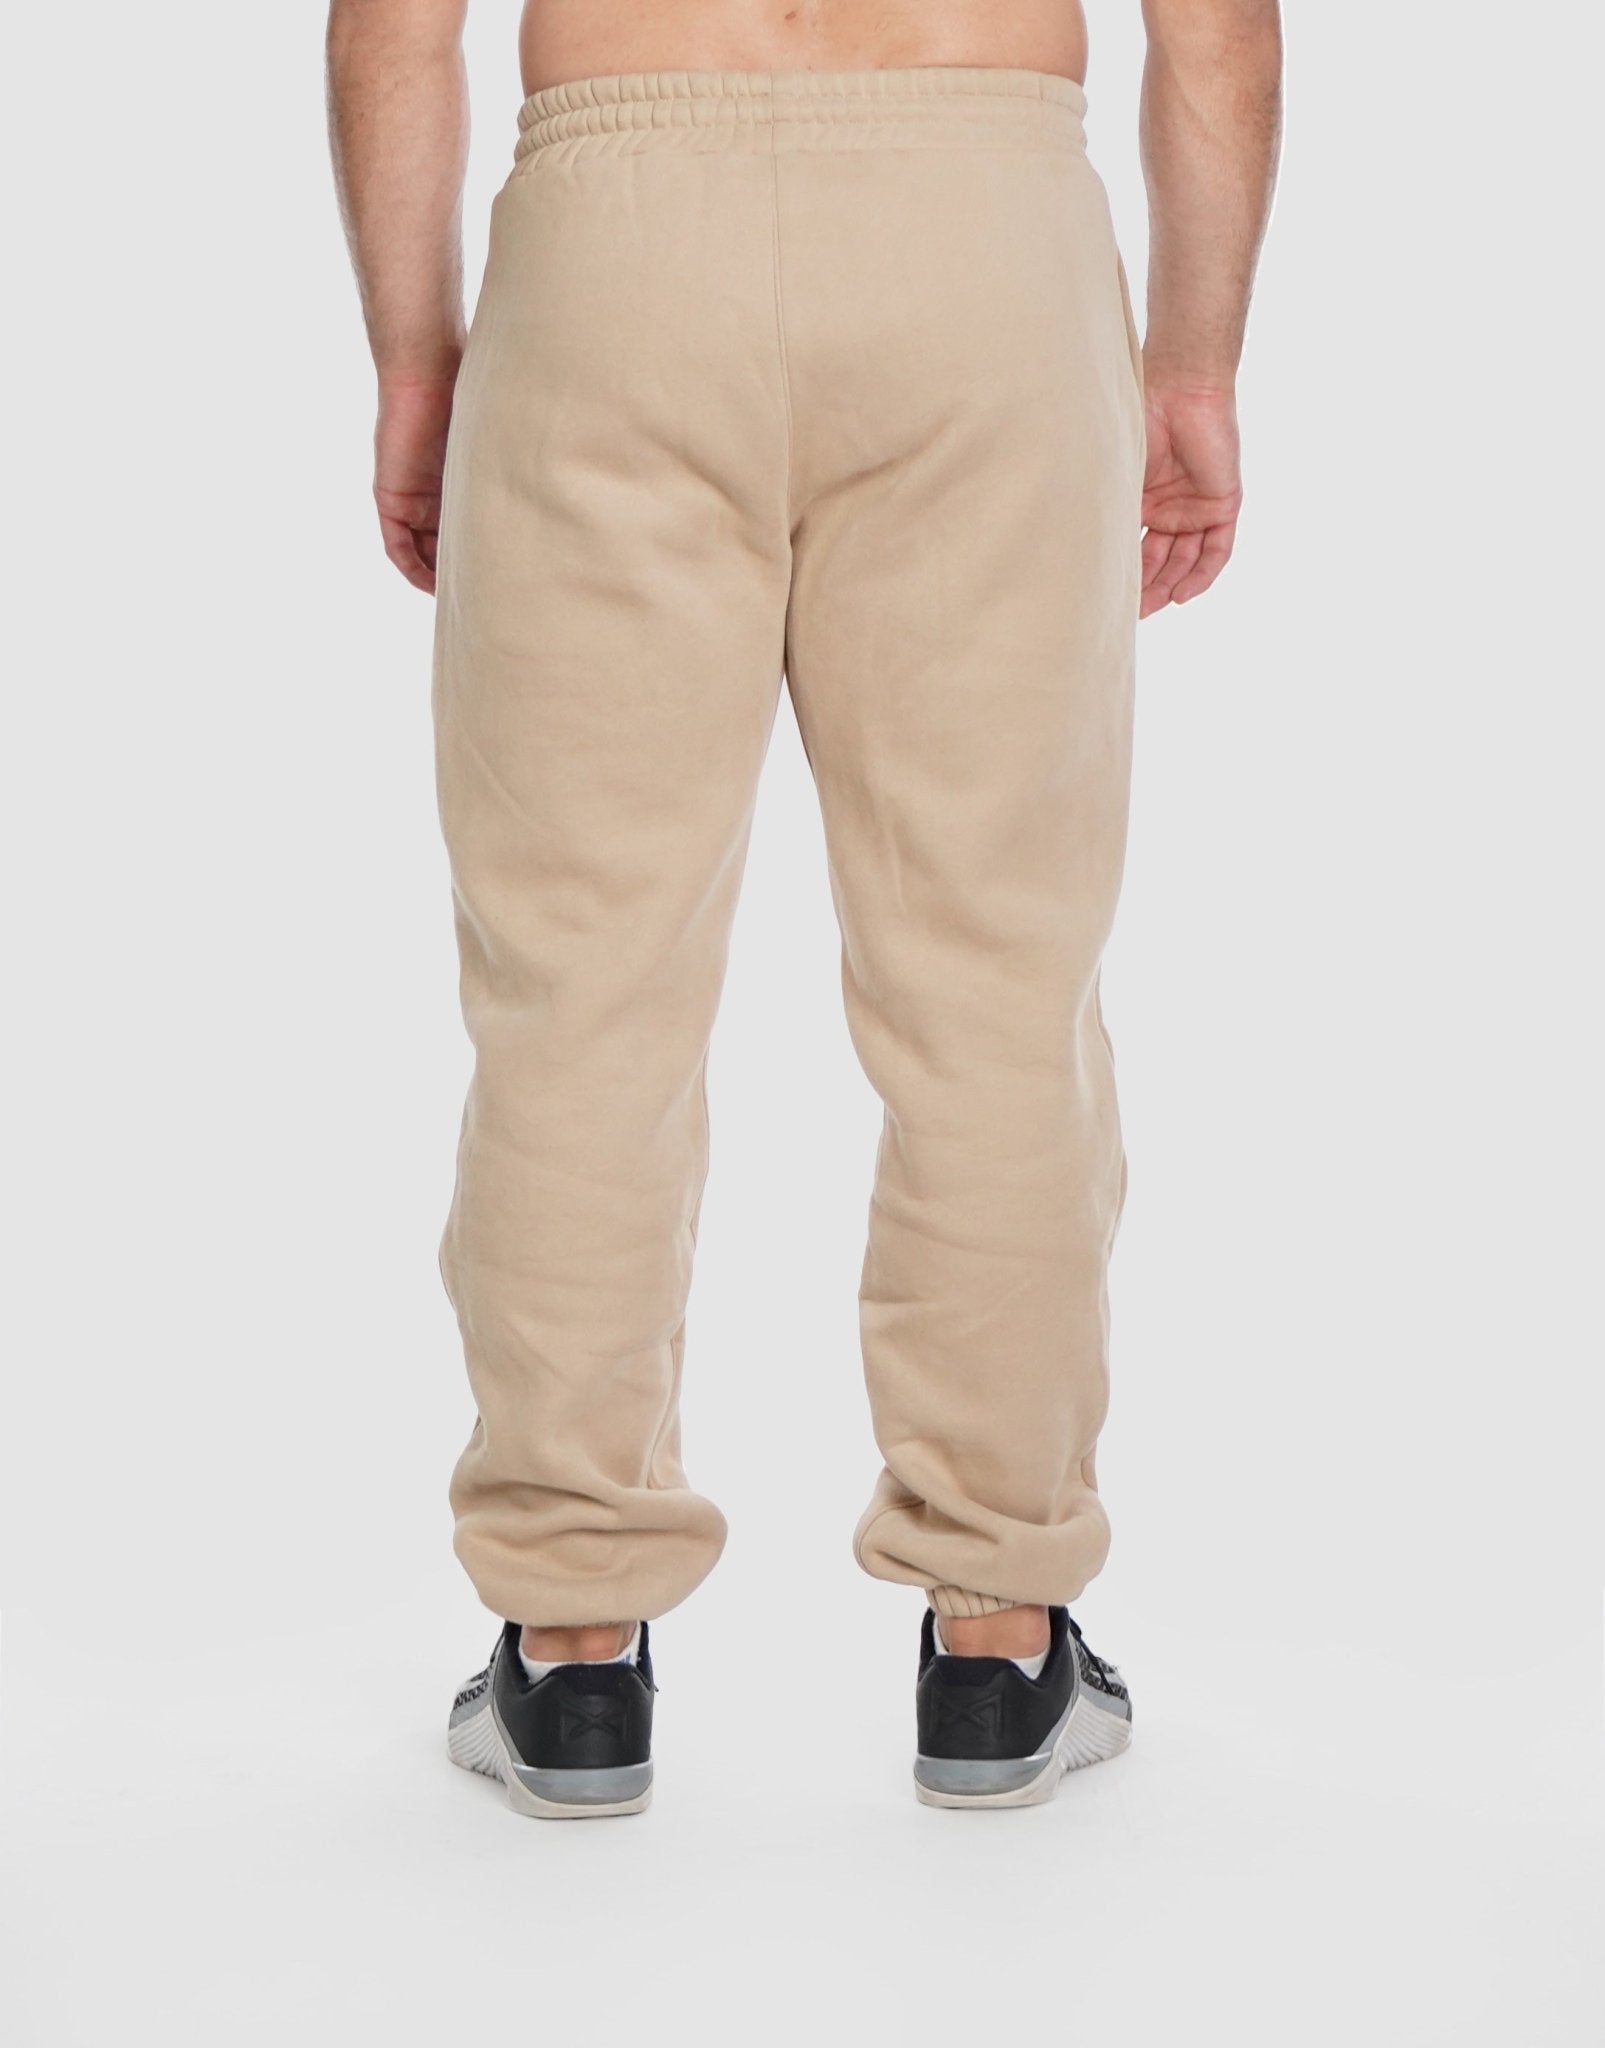 The Ultimate Comfort Sweatpants-Devoteewear-CA$79.00